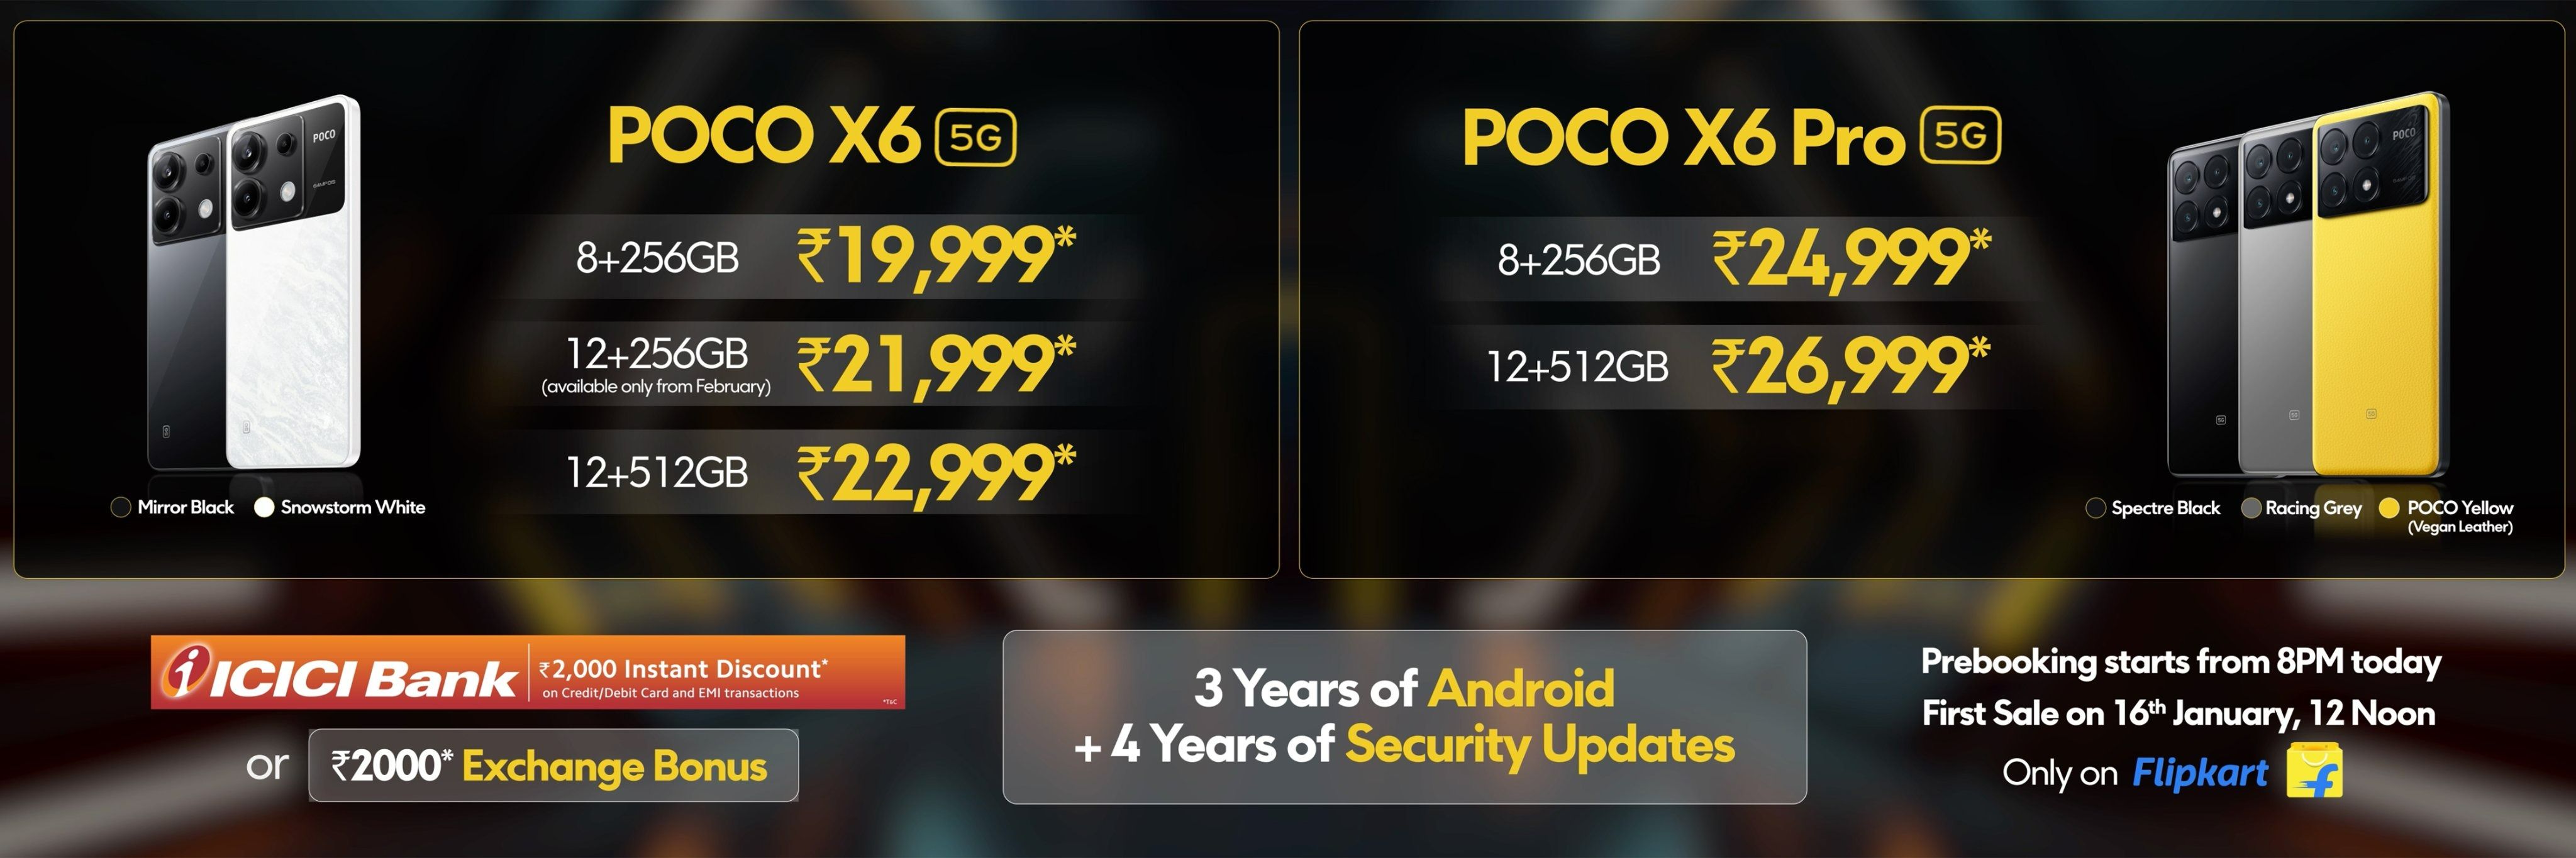 Porovnání POCO X6 PRO 5G 12GB/256GB vs. POCO X6 5G 12GB/256GB